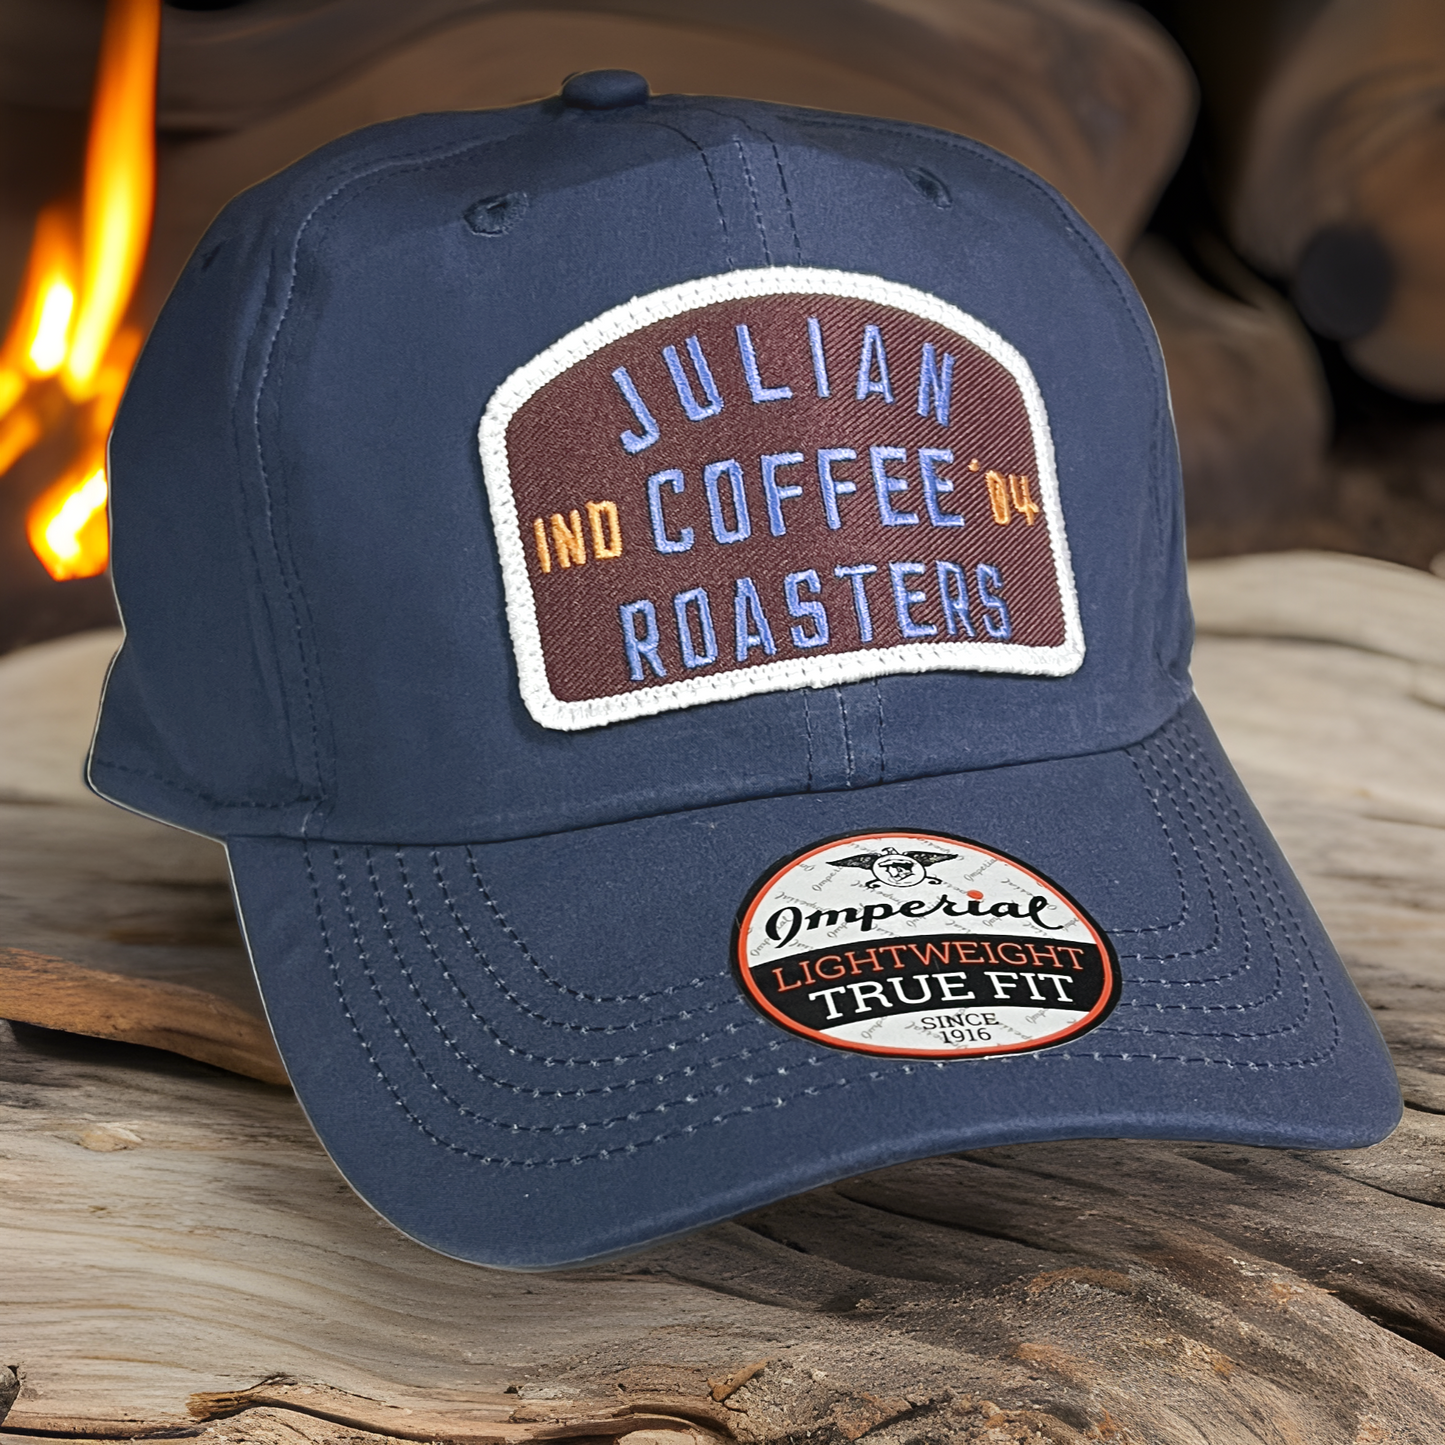 Julian Coffee Ball Cap